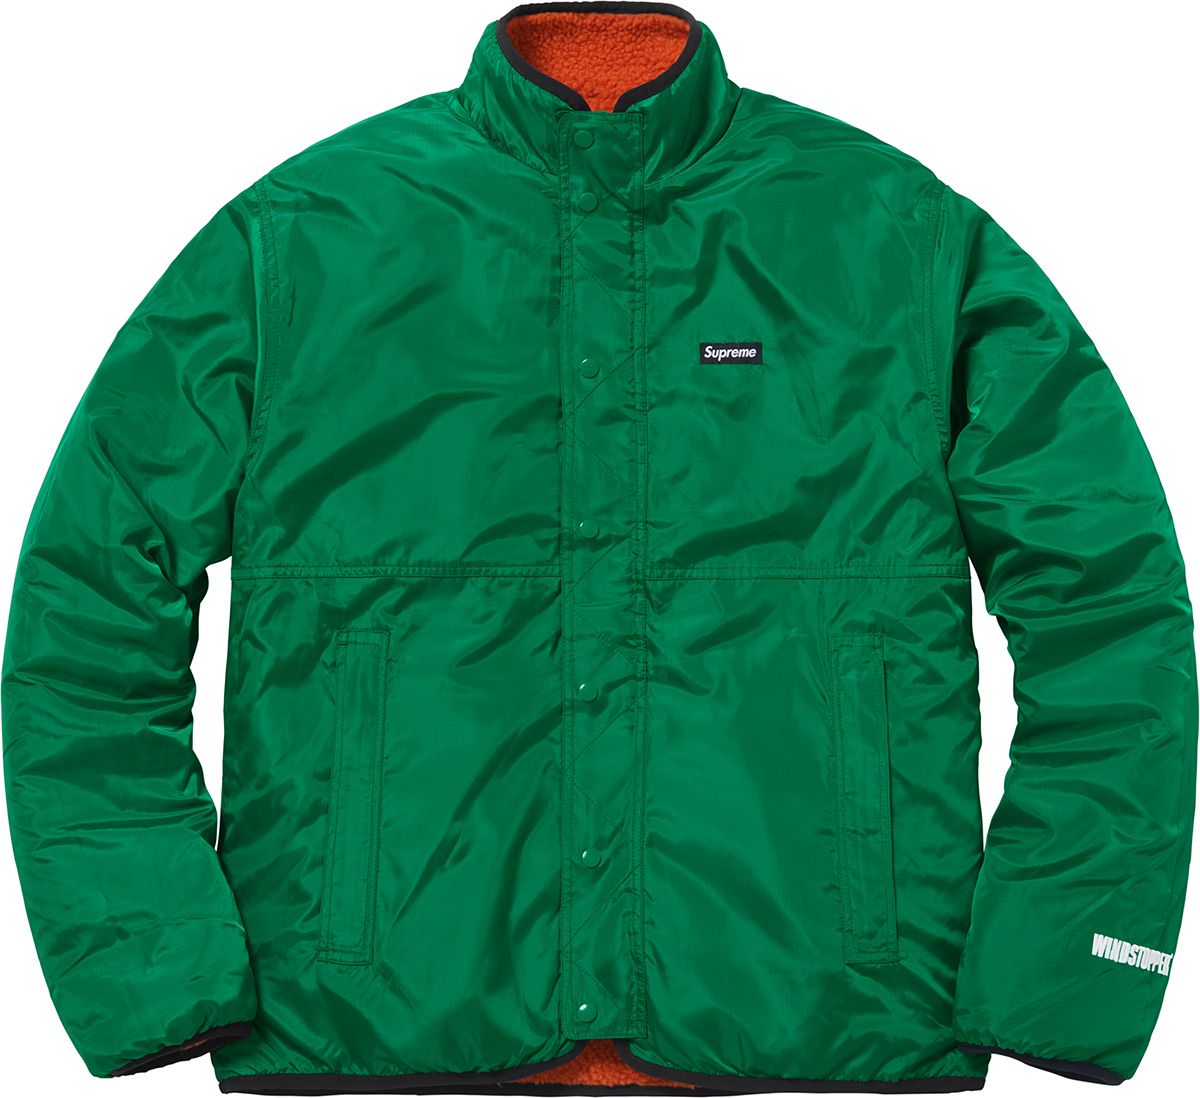 L supreme Reversible Logo Fleece Jacket - ブルゾン